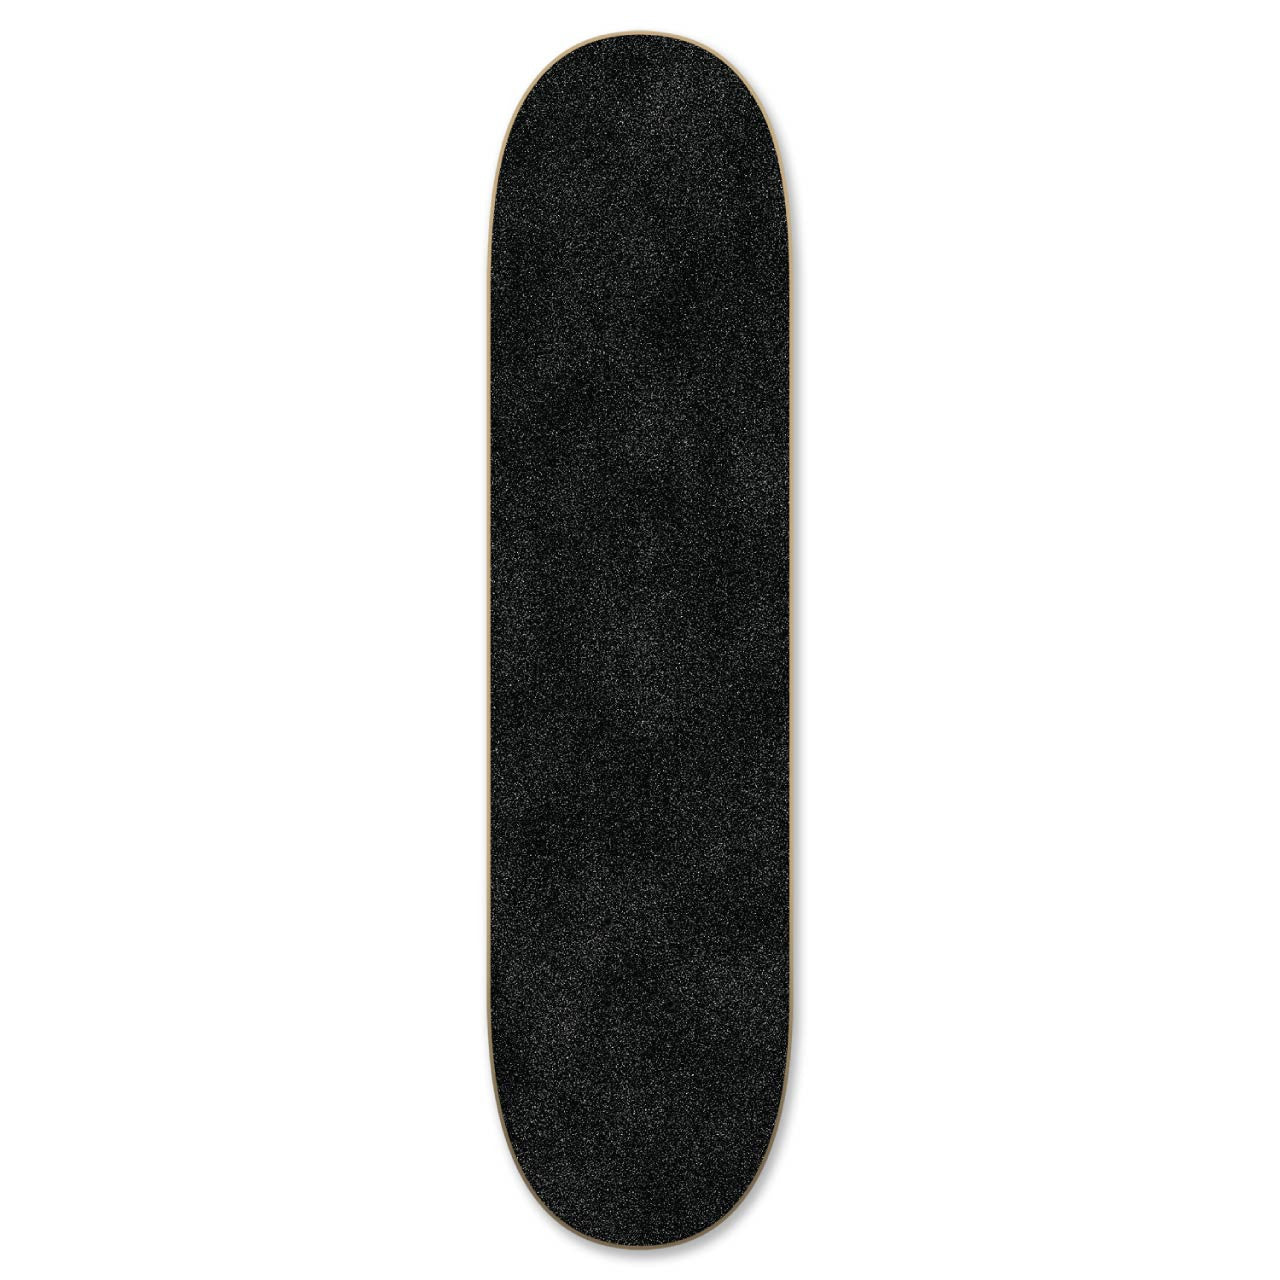 Graphic Skateboard Deck - Wander Golem